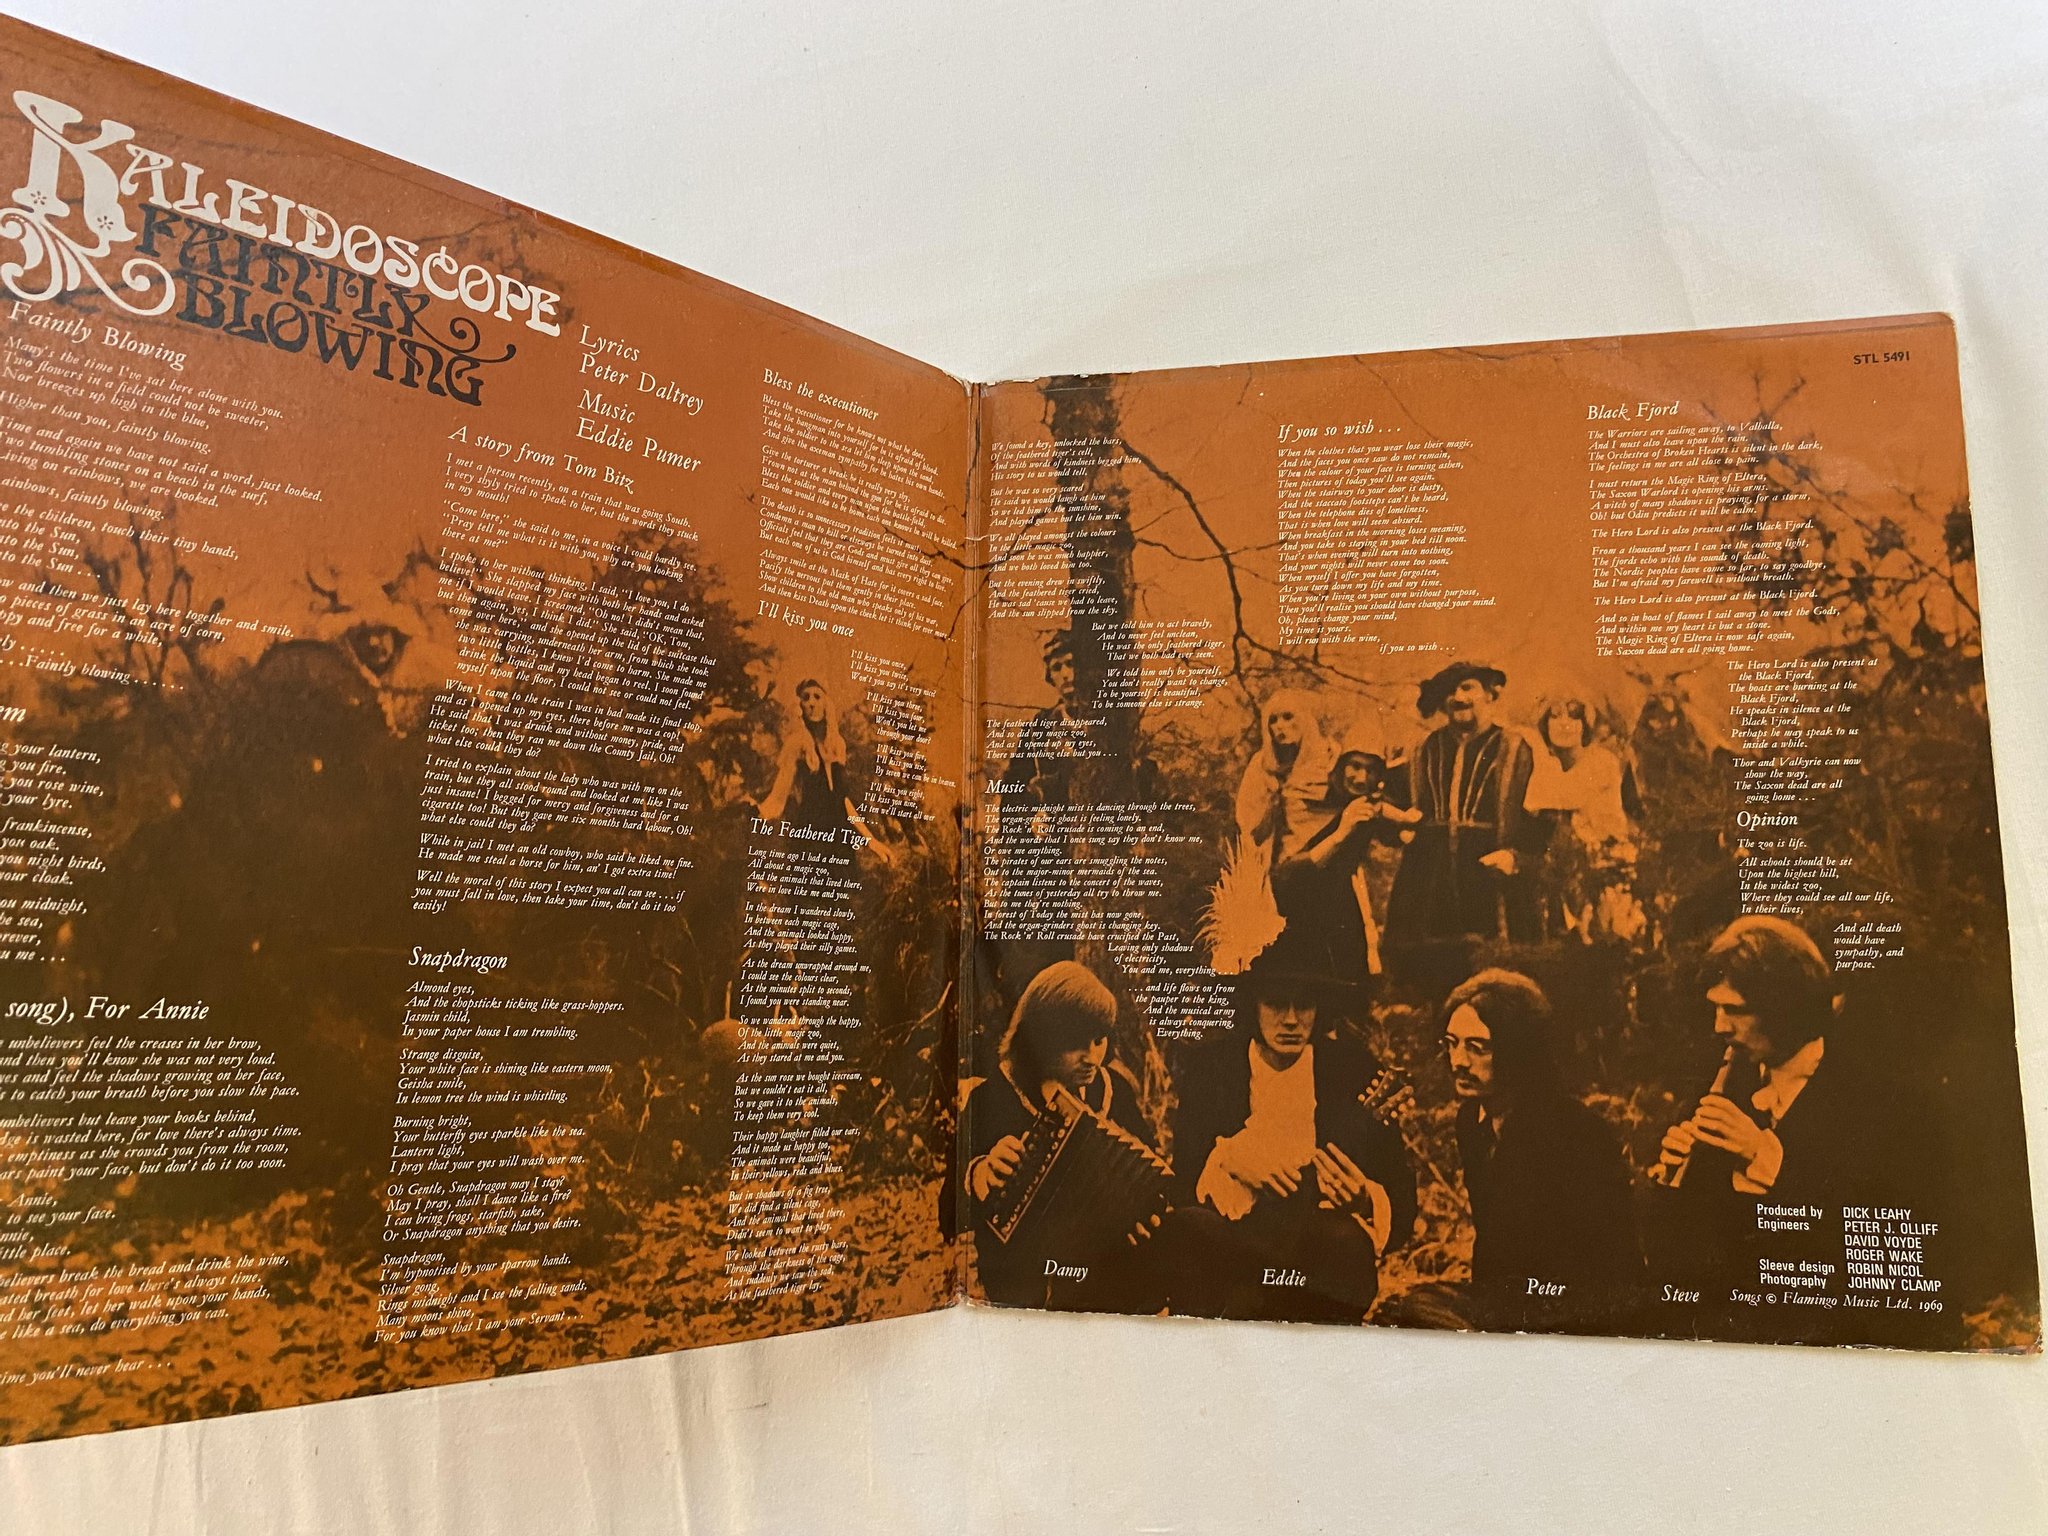 Omslagsbild för skivan KALEIDOSCOPE Faintly Blowing LP -69 UK fontana sty 5491 ***ULTRA RARE PSYCH **